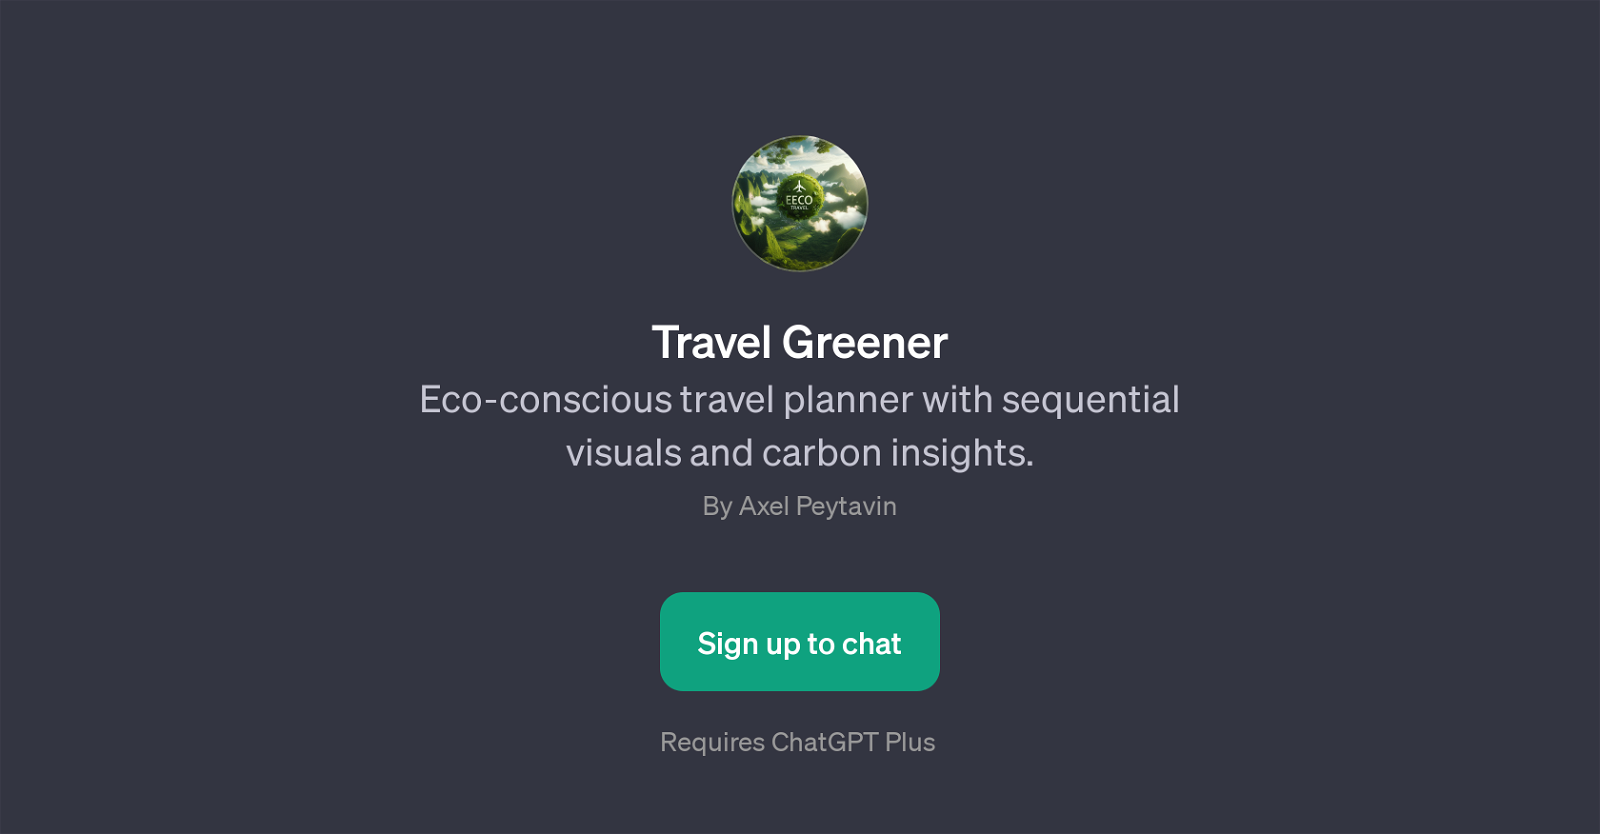 Travel Greener website